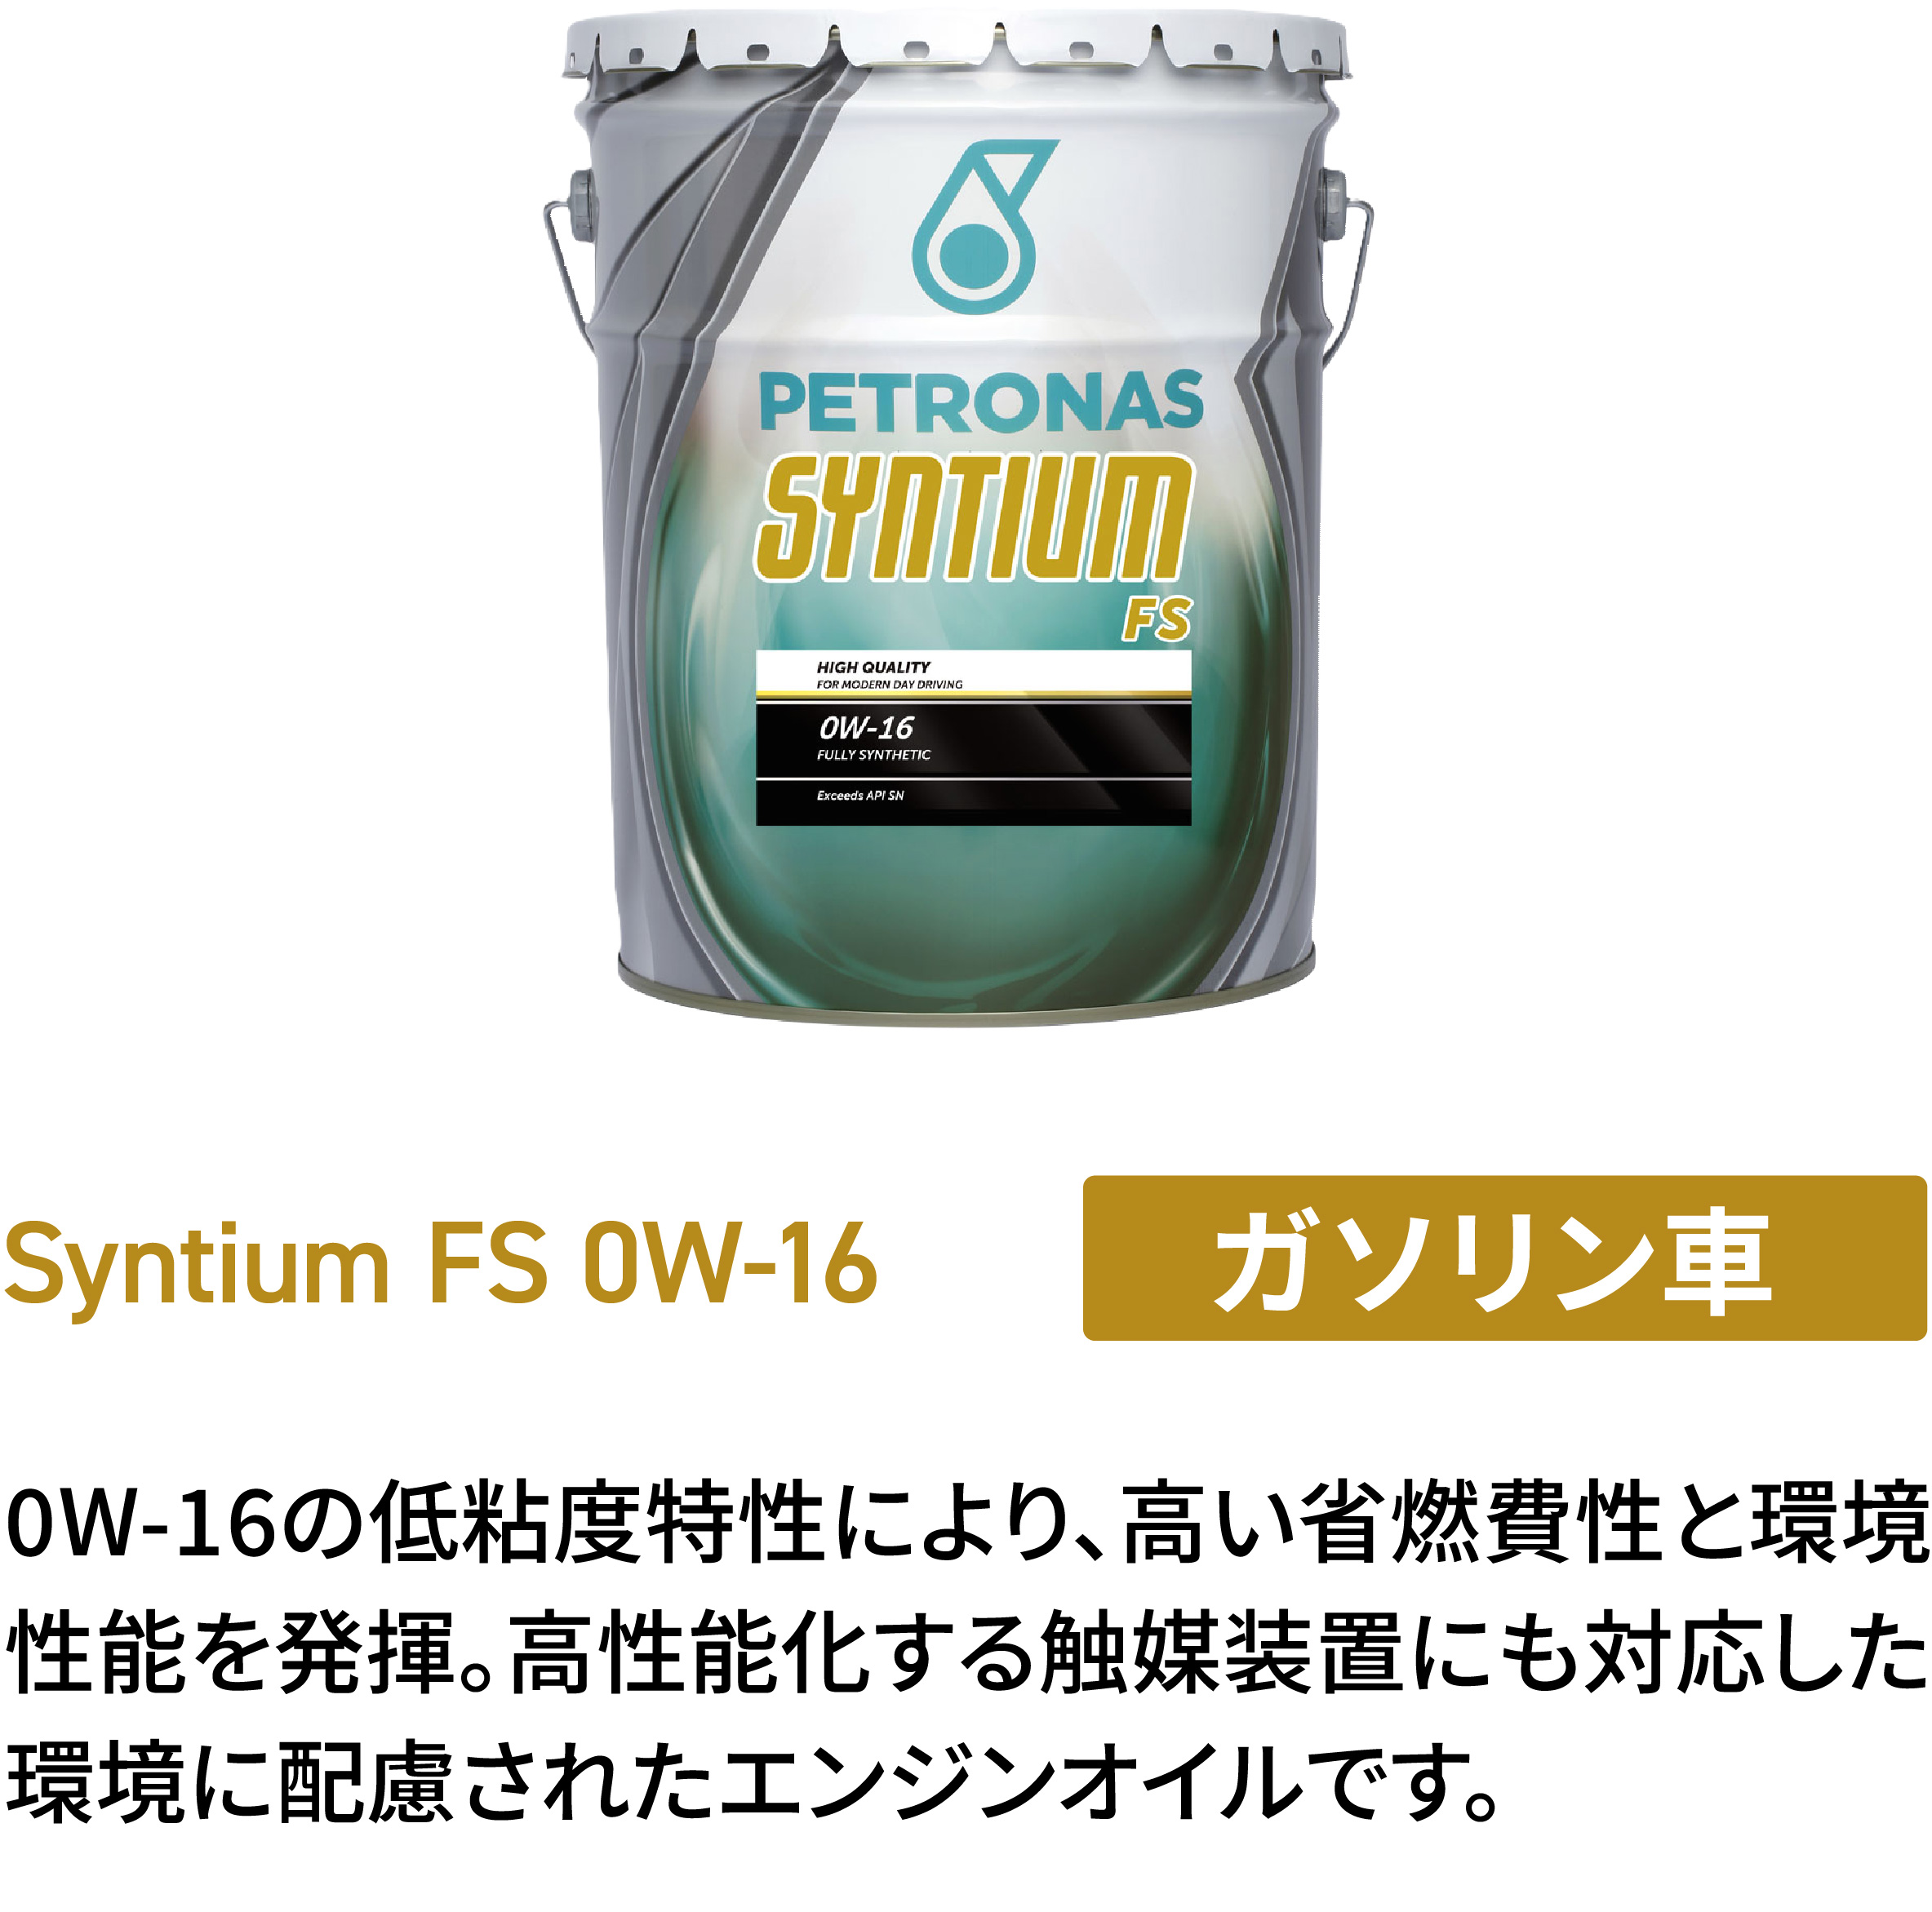 Syntium FS 0W-16